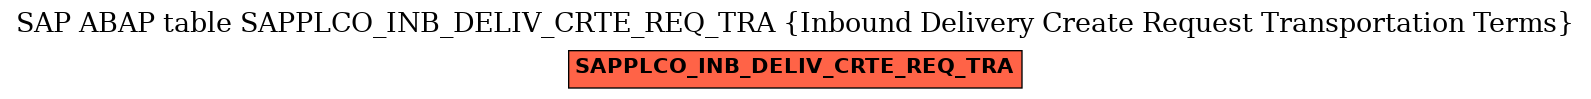 E-R Diagram for table SAPPLCO_INB_DELIV_CRTE_REQ_TRA (Inbound Delivery Create Request Transportation Terms)